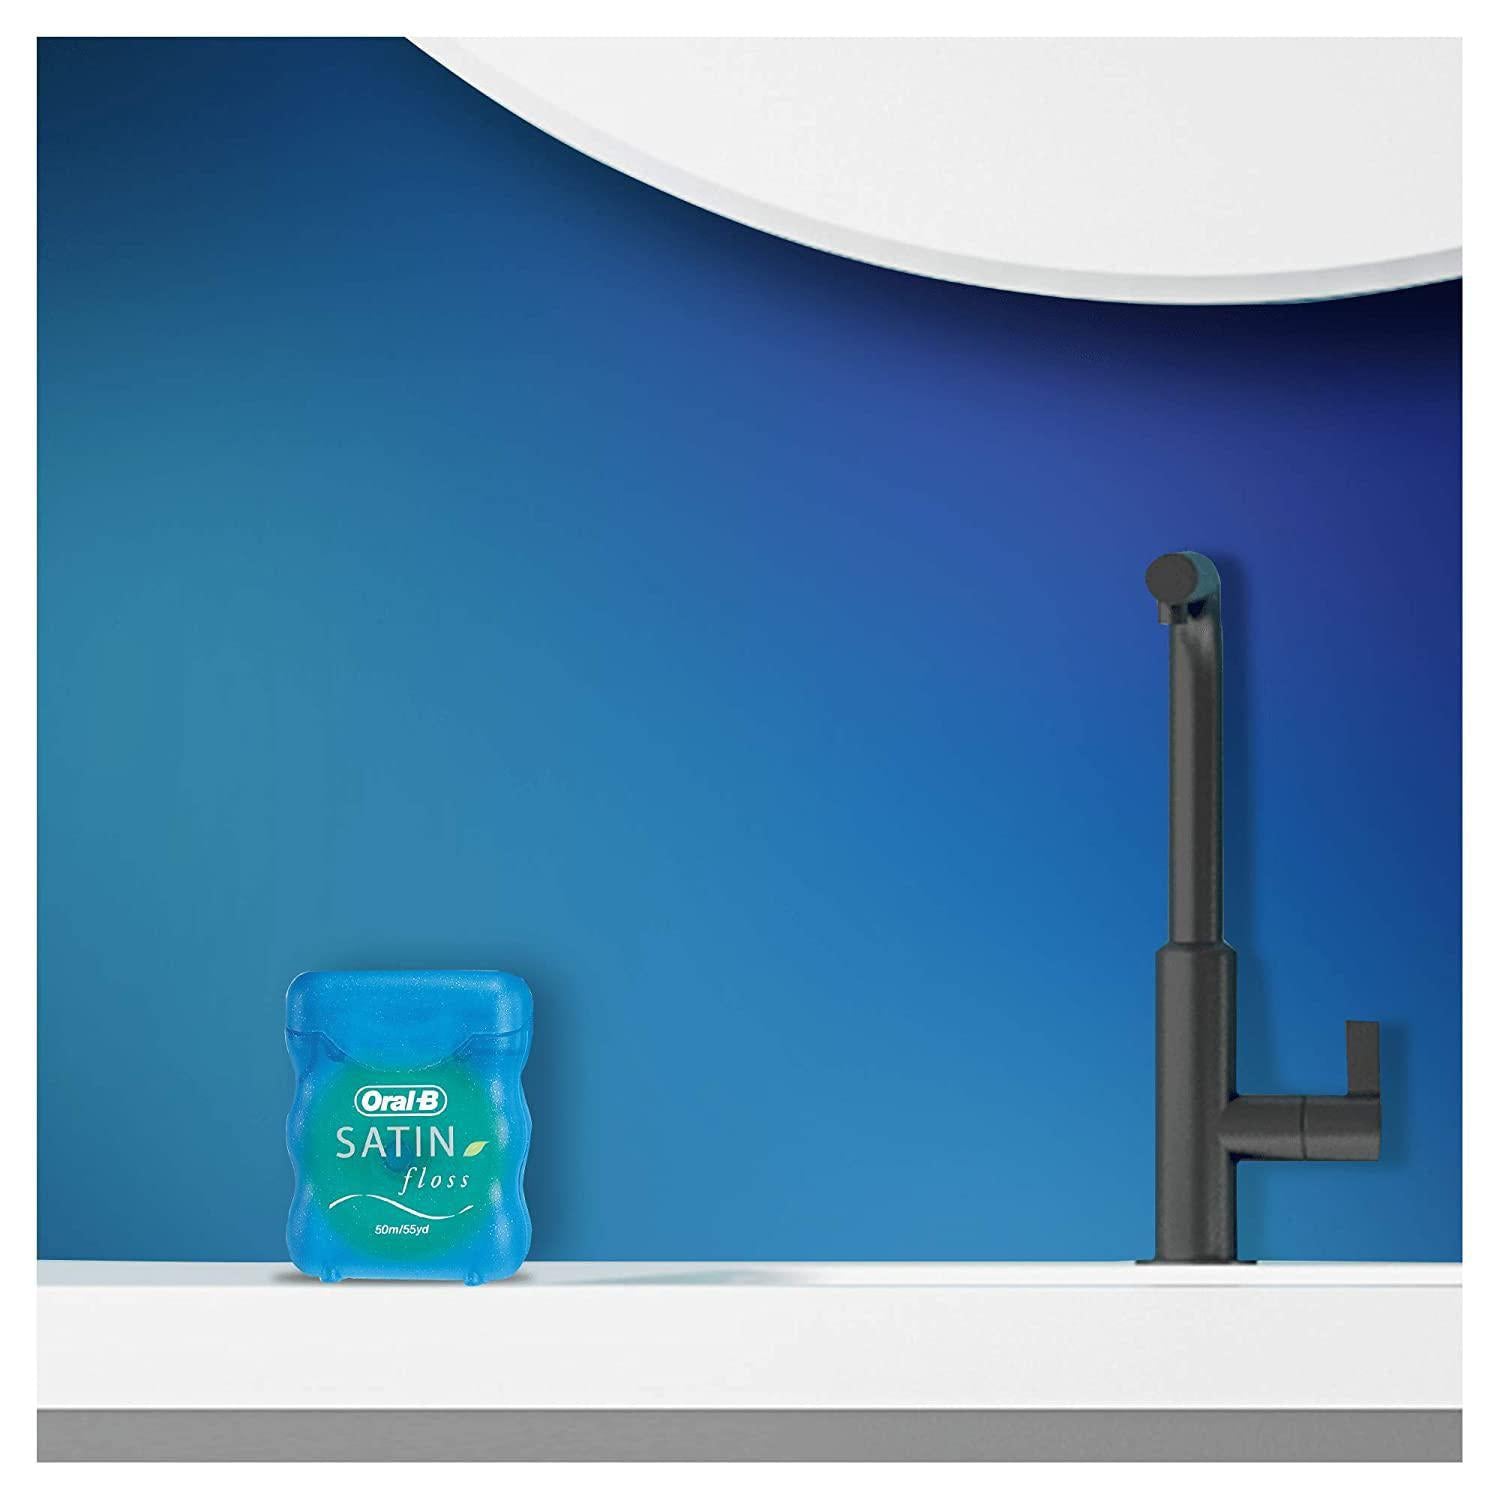 Oral-B Satin Floss Mint Dental Floss - Comfort Grip, Oval Shape - Mint, 25M - Healthxpress.ie